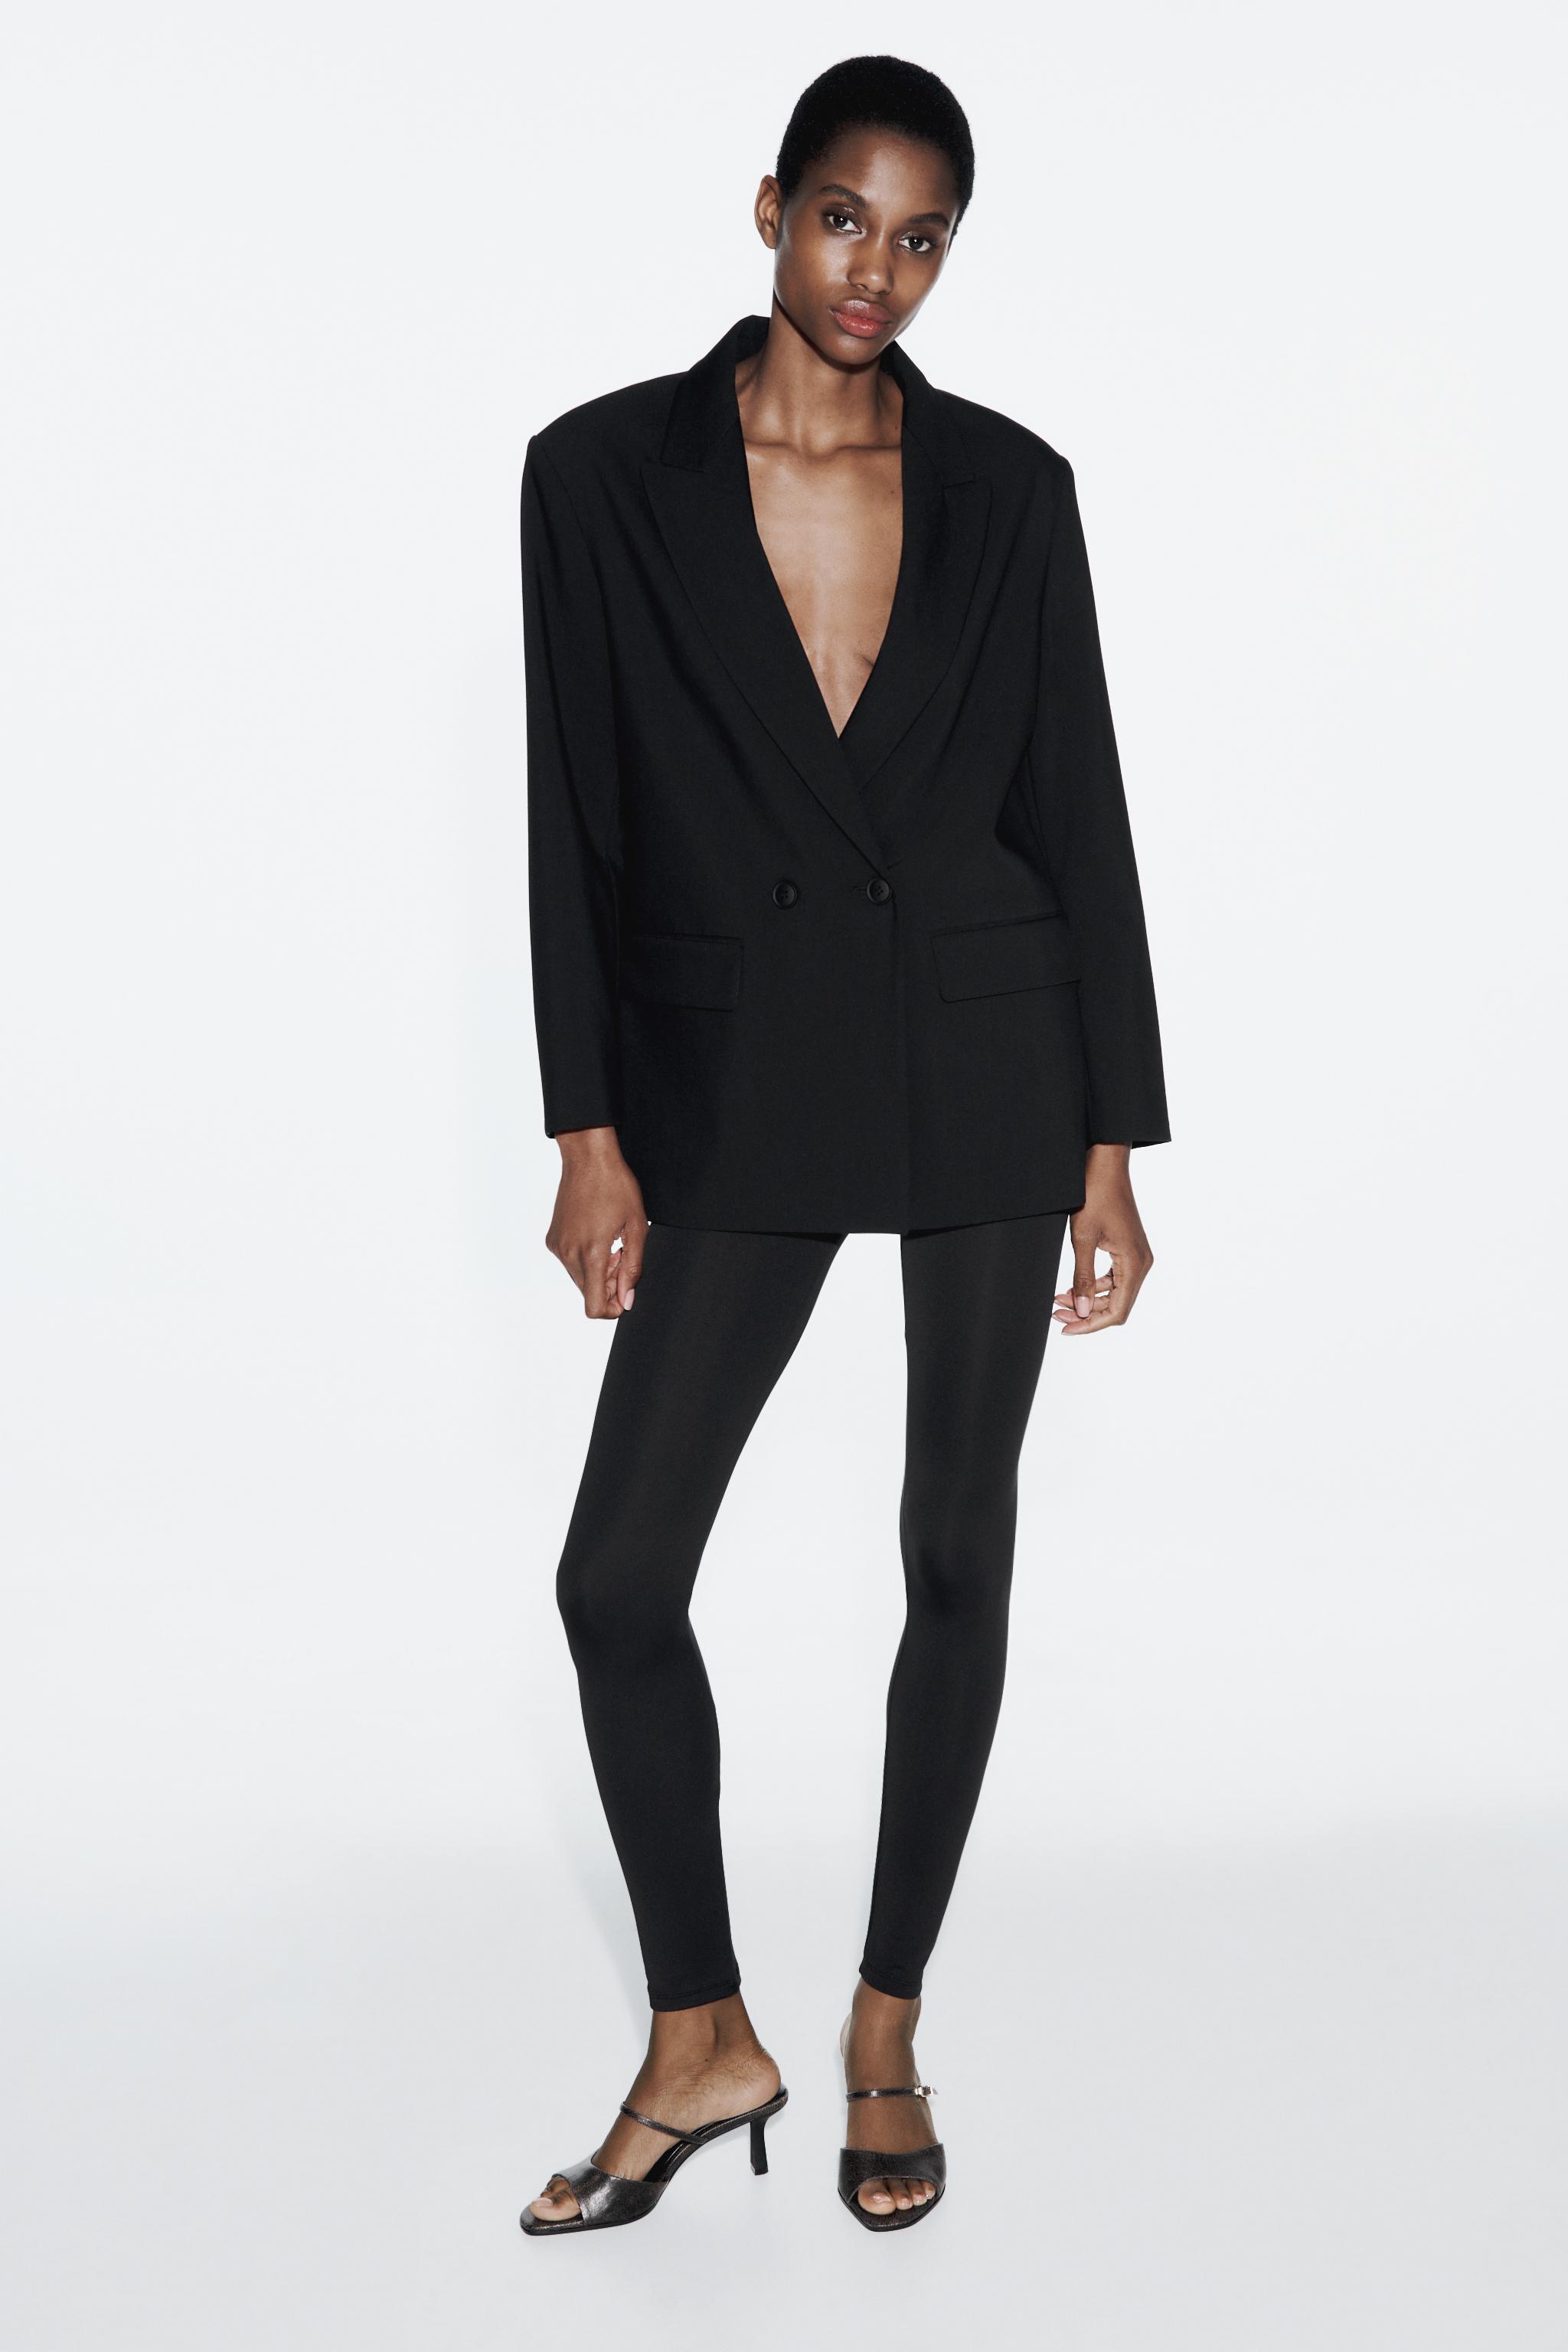 Zara Cashmere knit leggings black size 9-12 months new